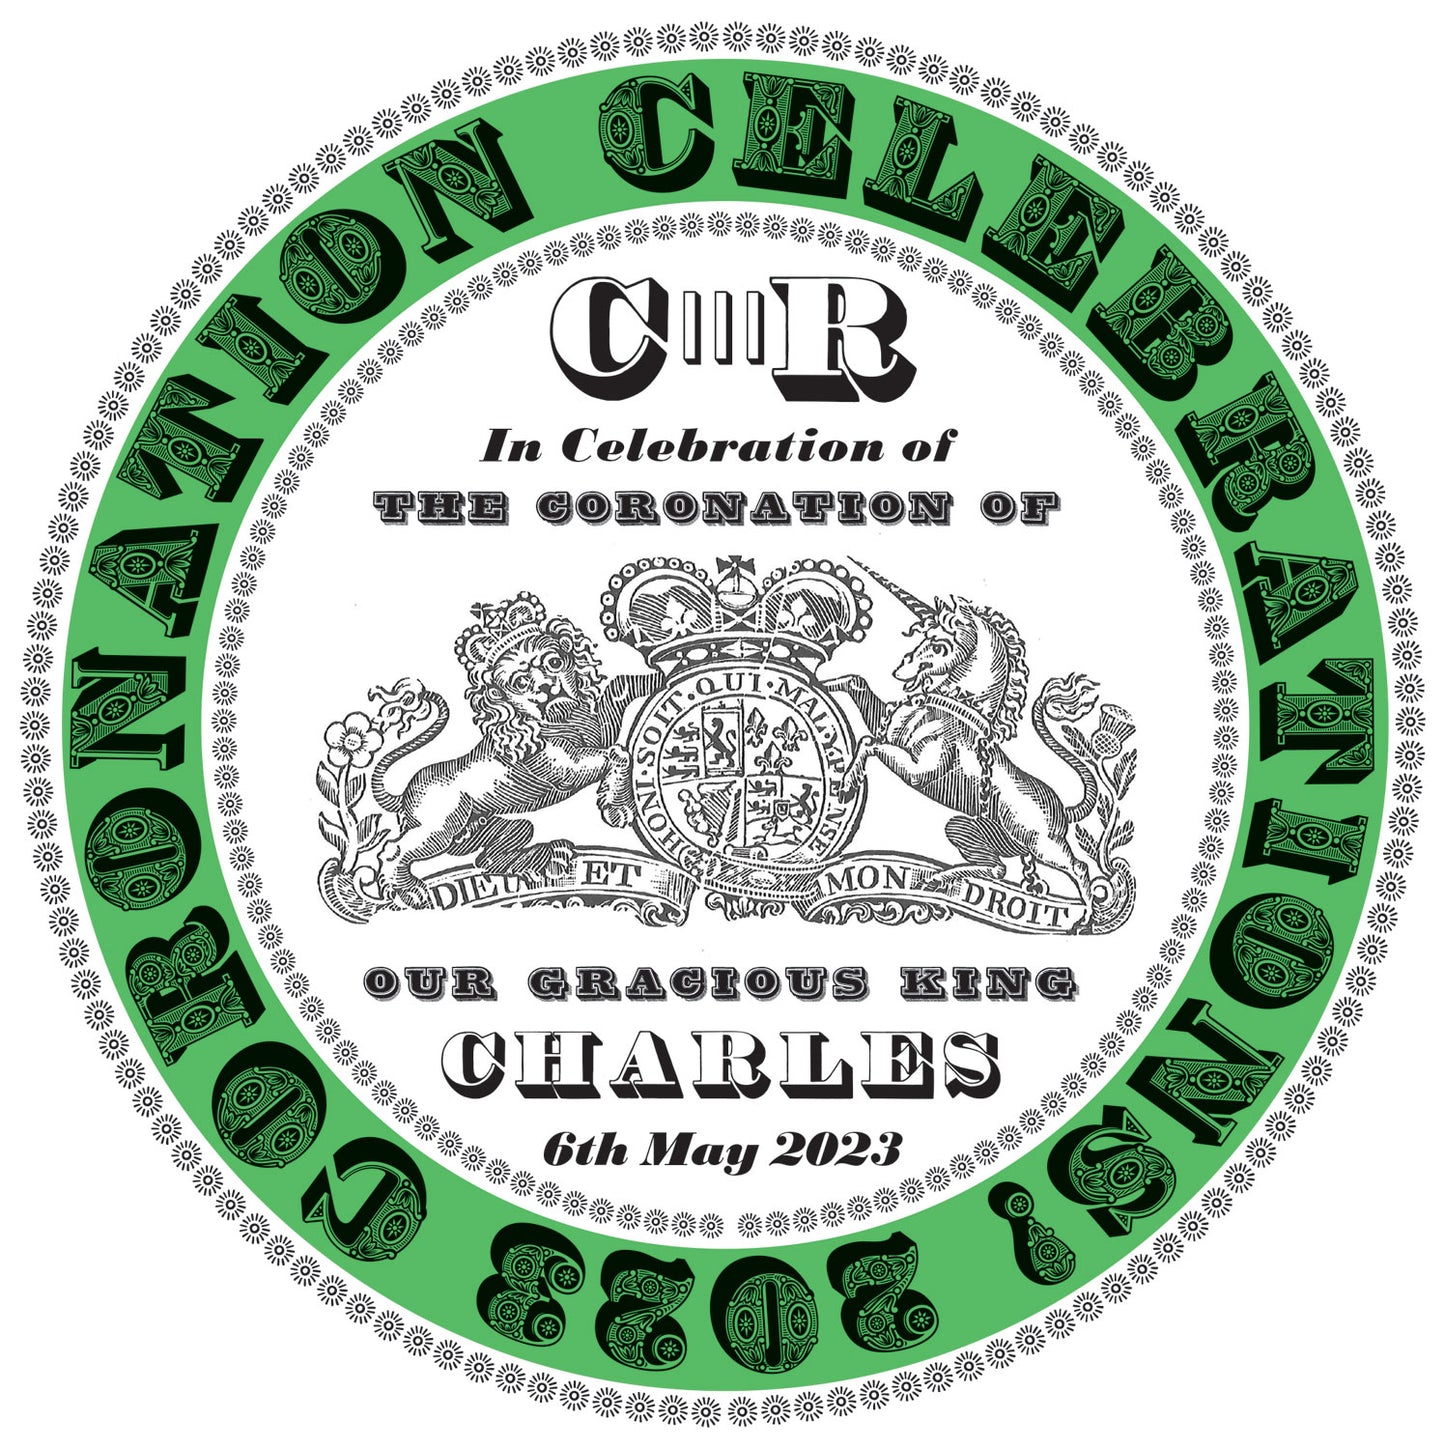 7” Coronation Celebrations Decoupage Plate - Green